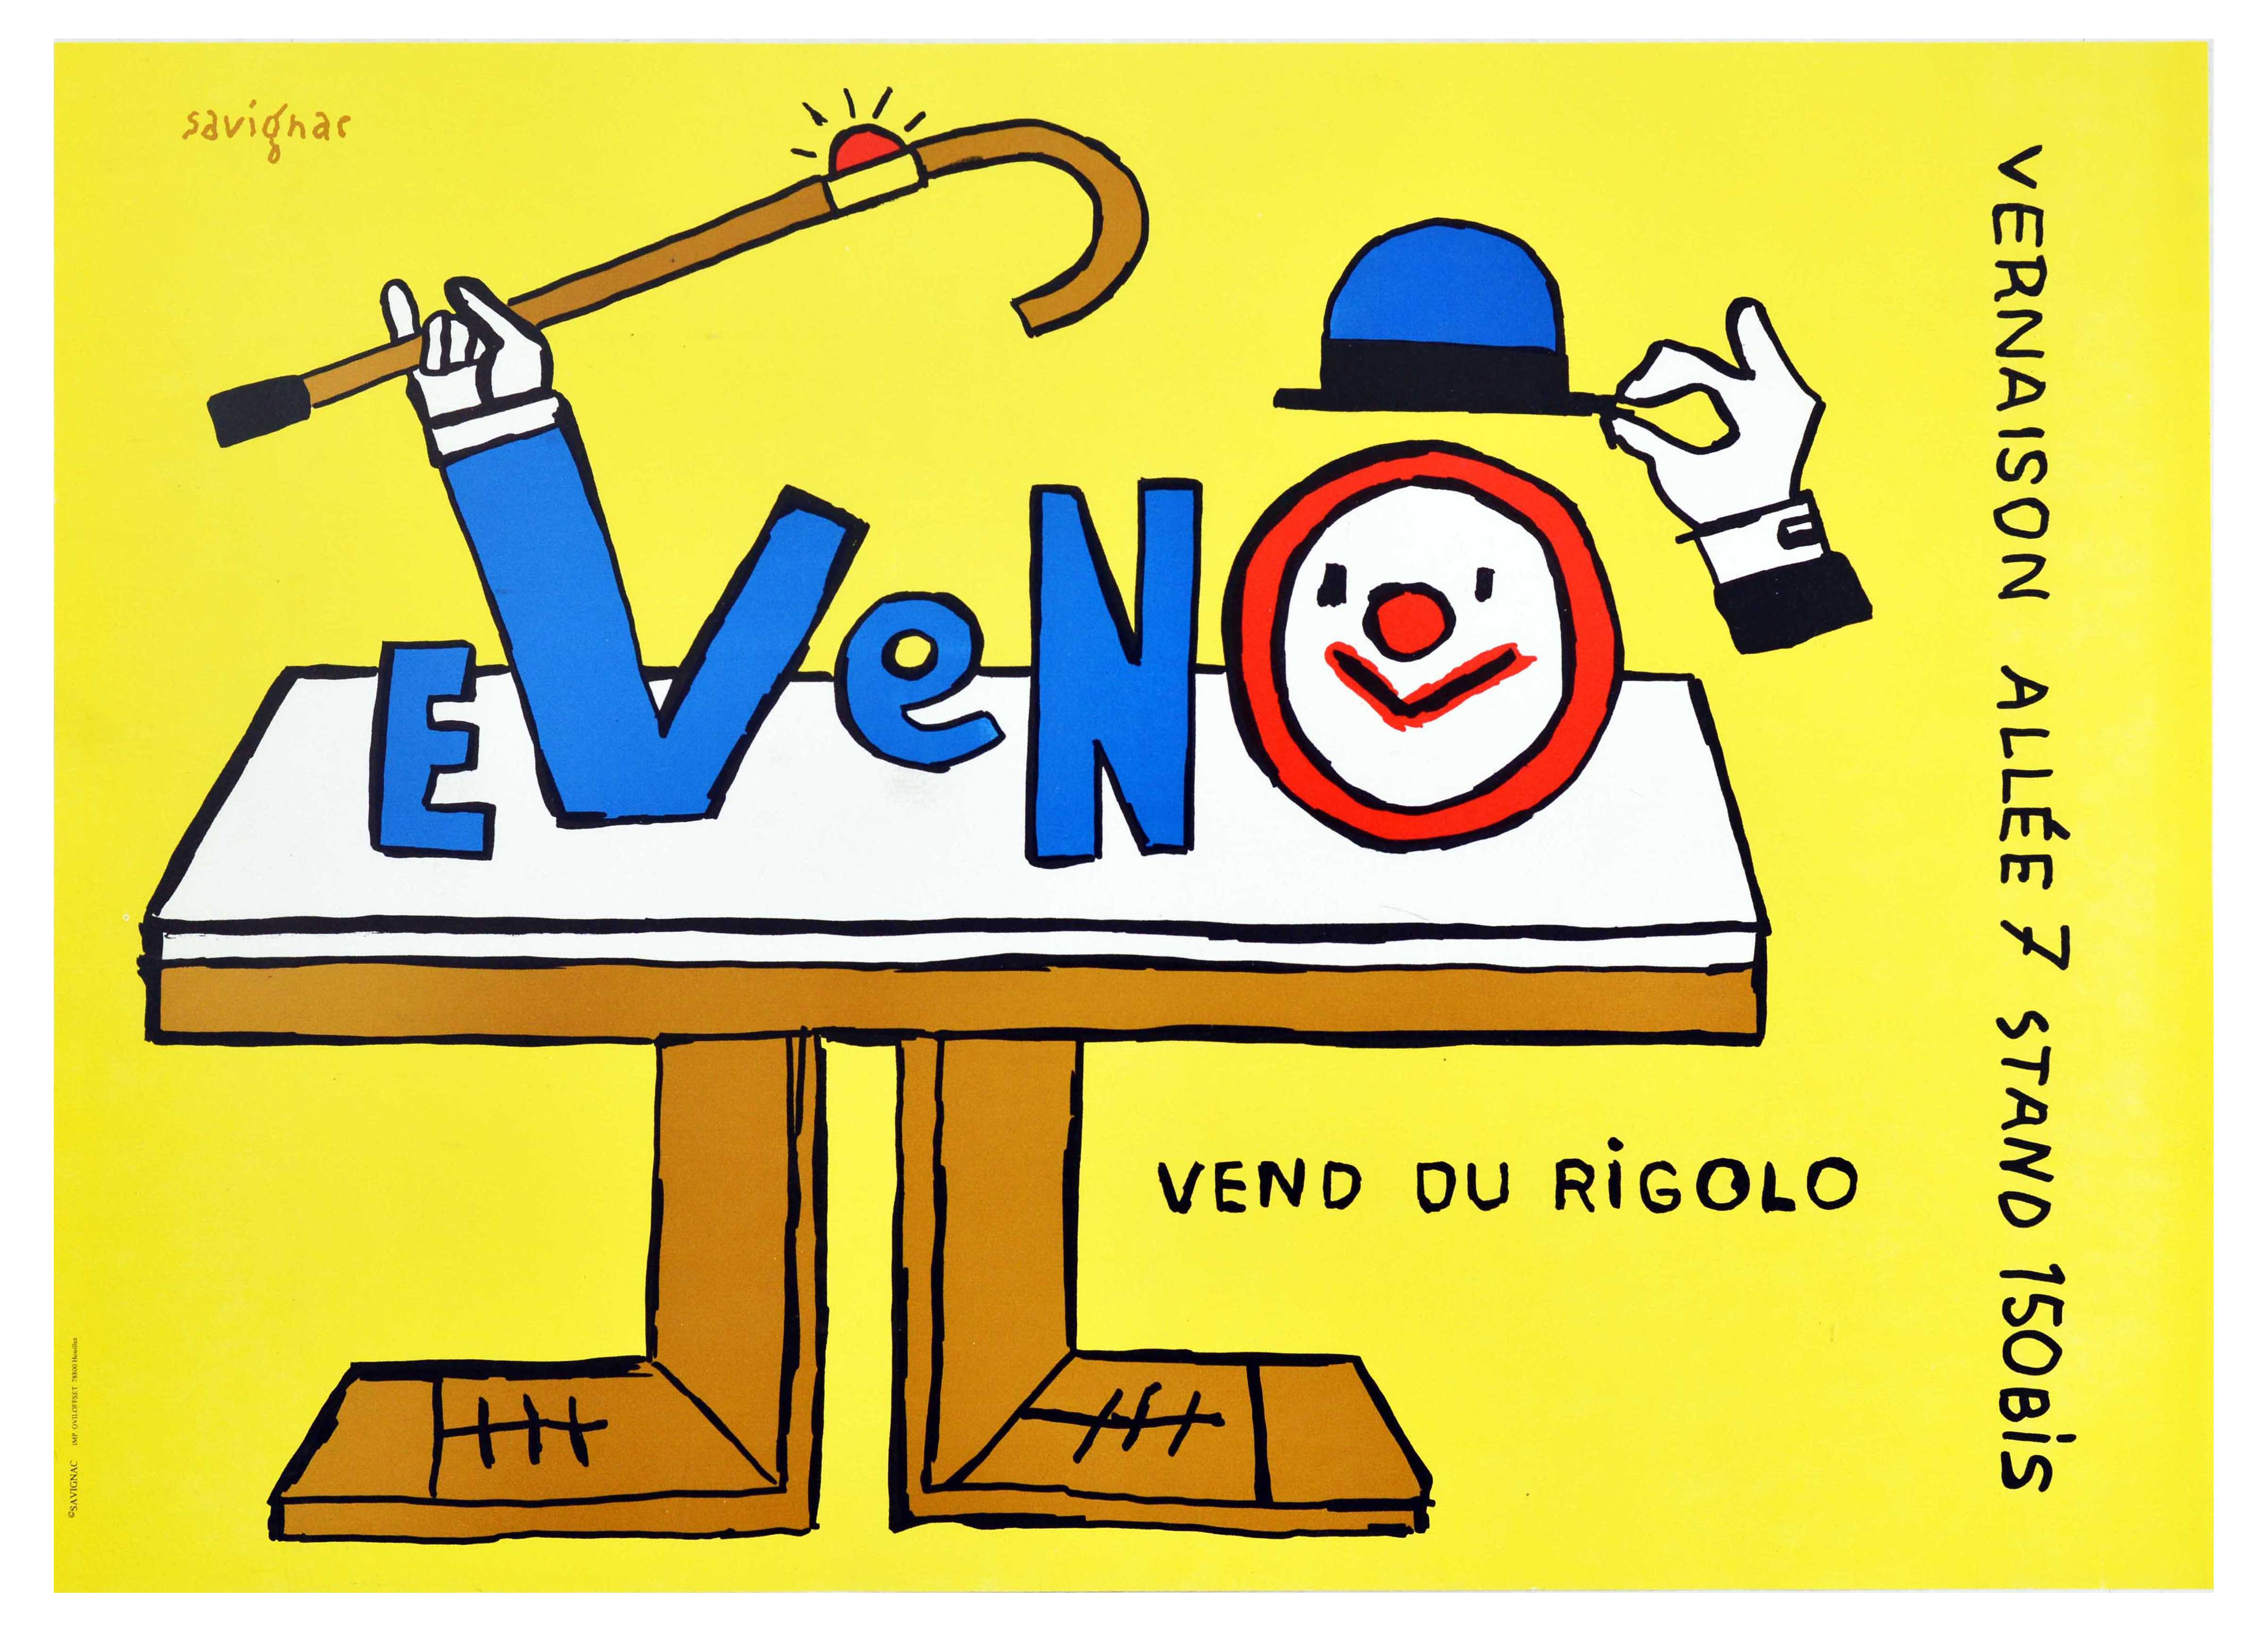 Advertising Poster Eveno Vend du Rigolo Raymond Savignac